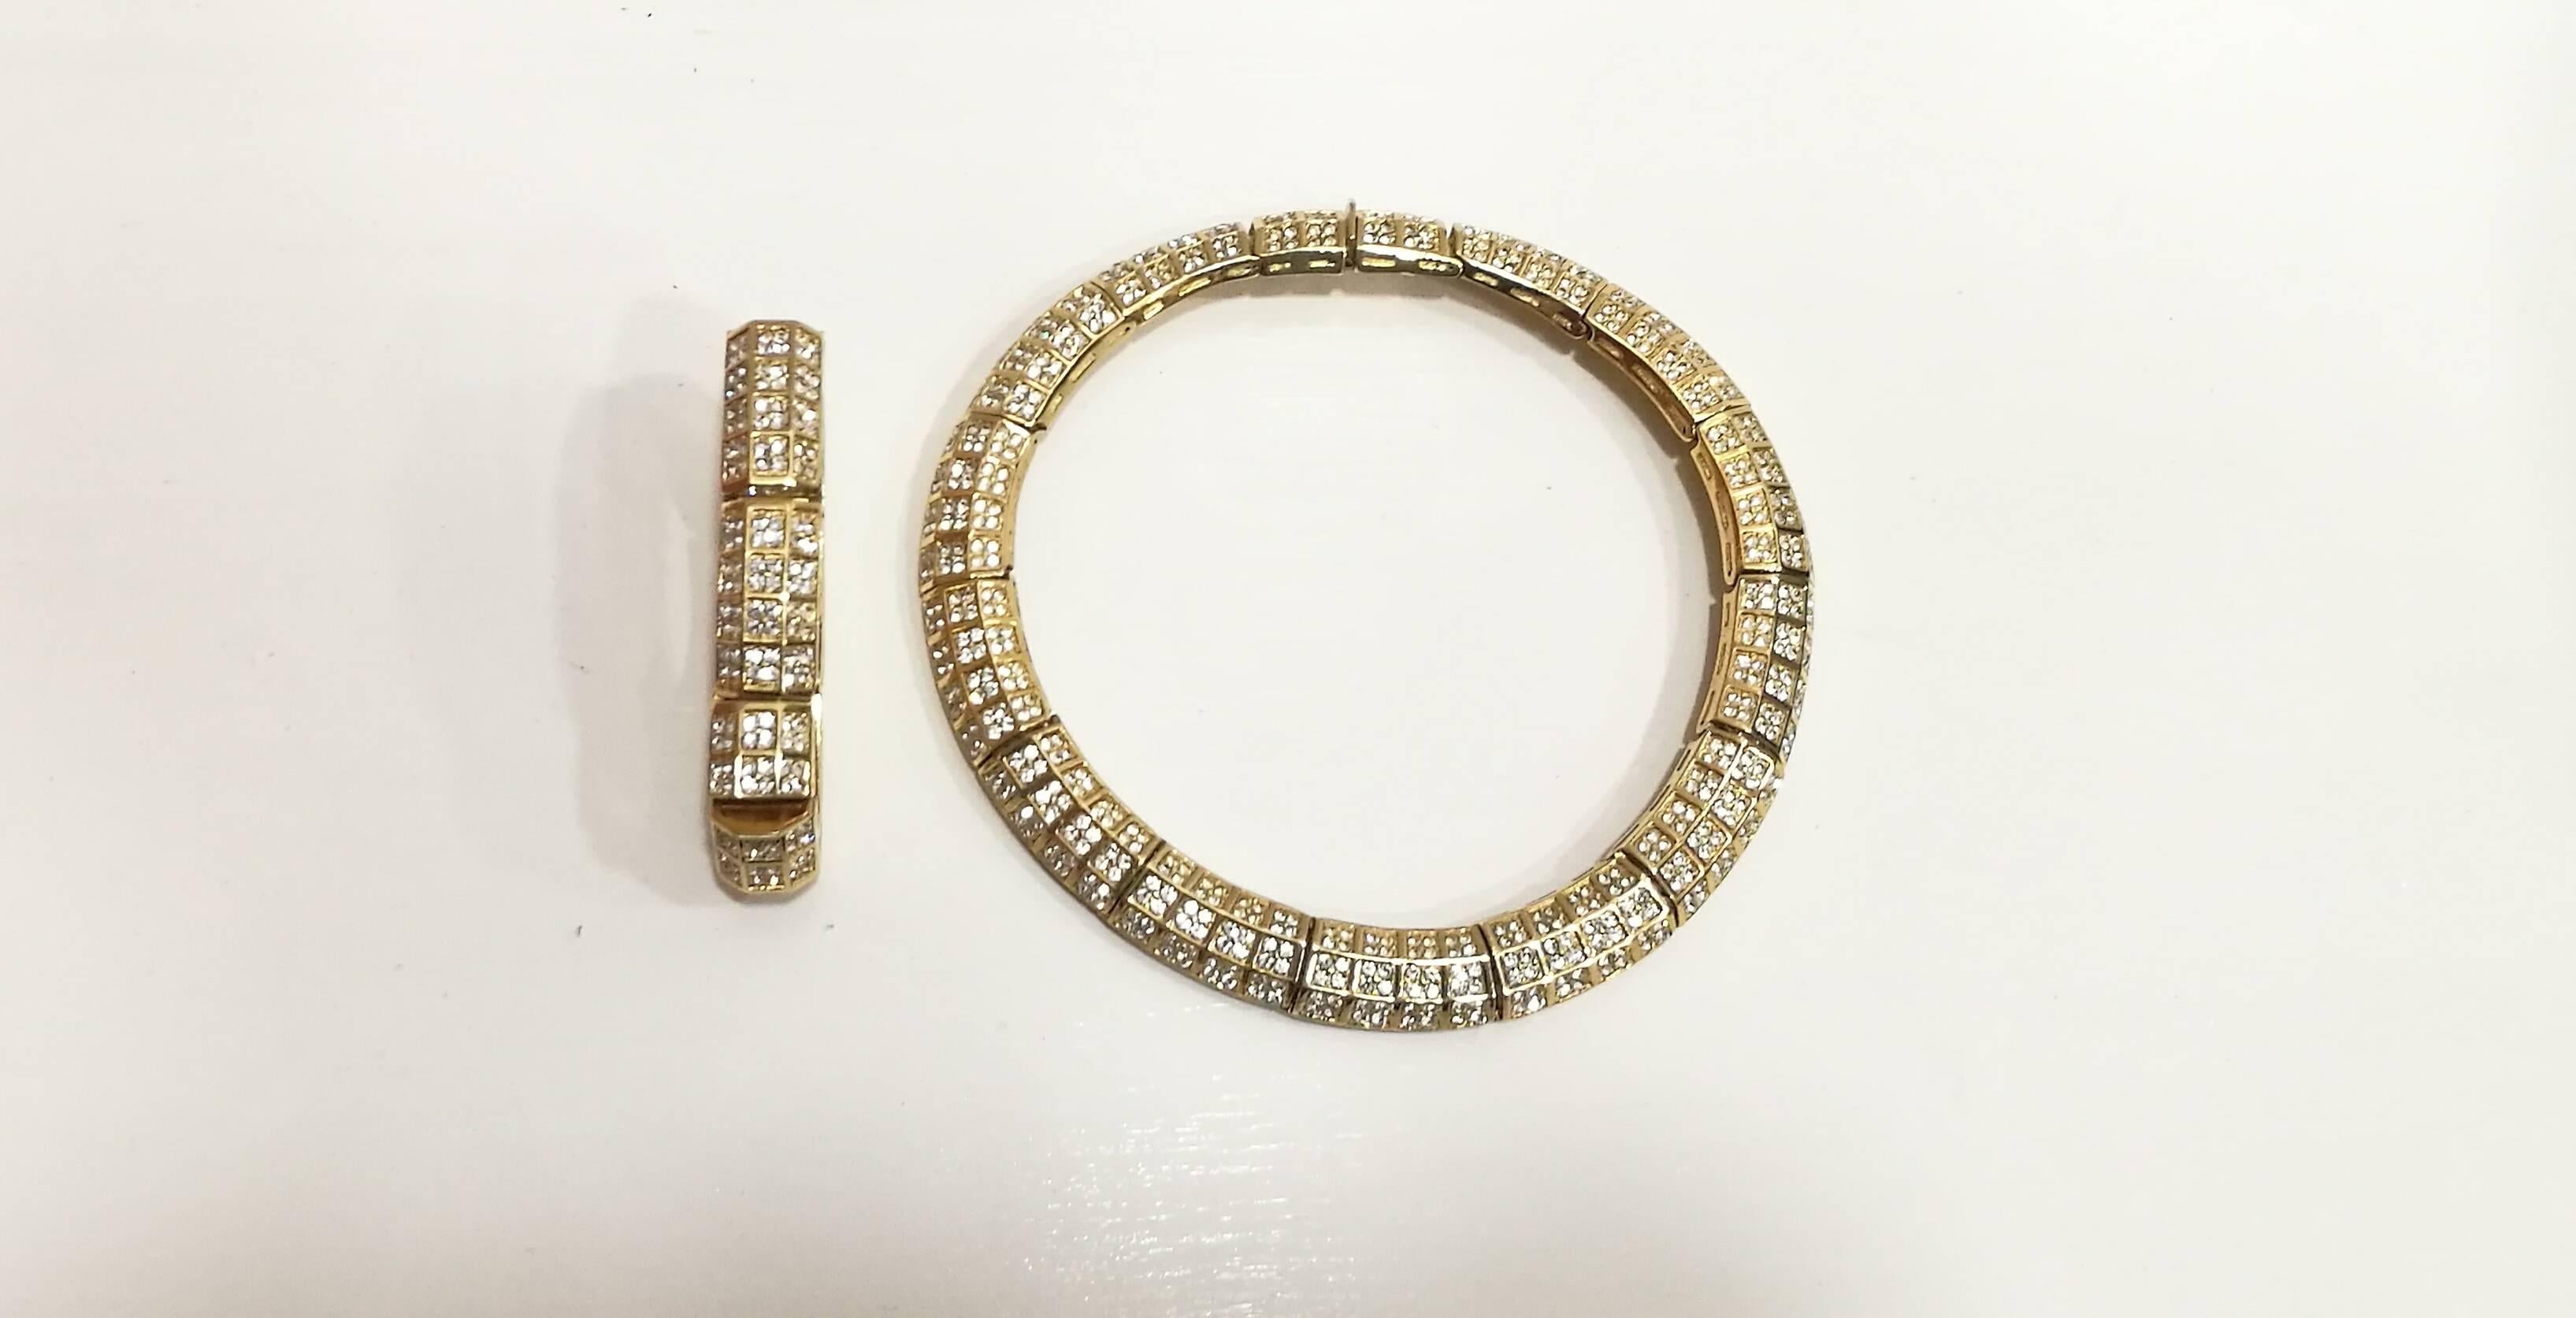 Chr Dior Germany parure vintage
Gold tone bracelet and necklace parure with crystal swarovski all over
Dior Necklace measurements:
Total lenght 46 cm
Dior Bracelet Measurements:
Total lenght: 22.5 cm